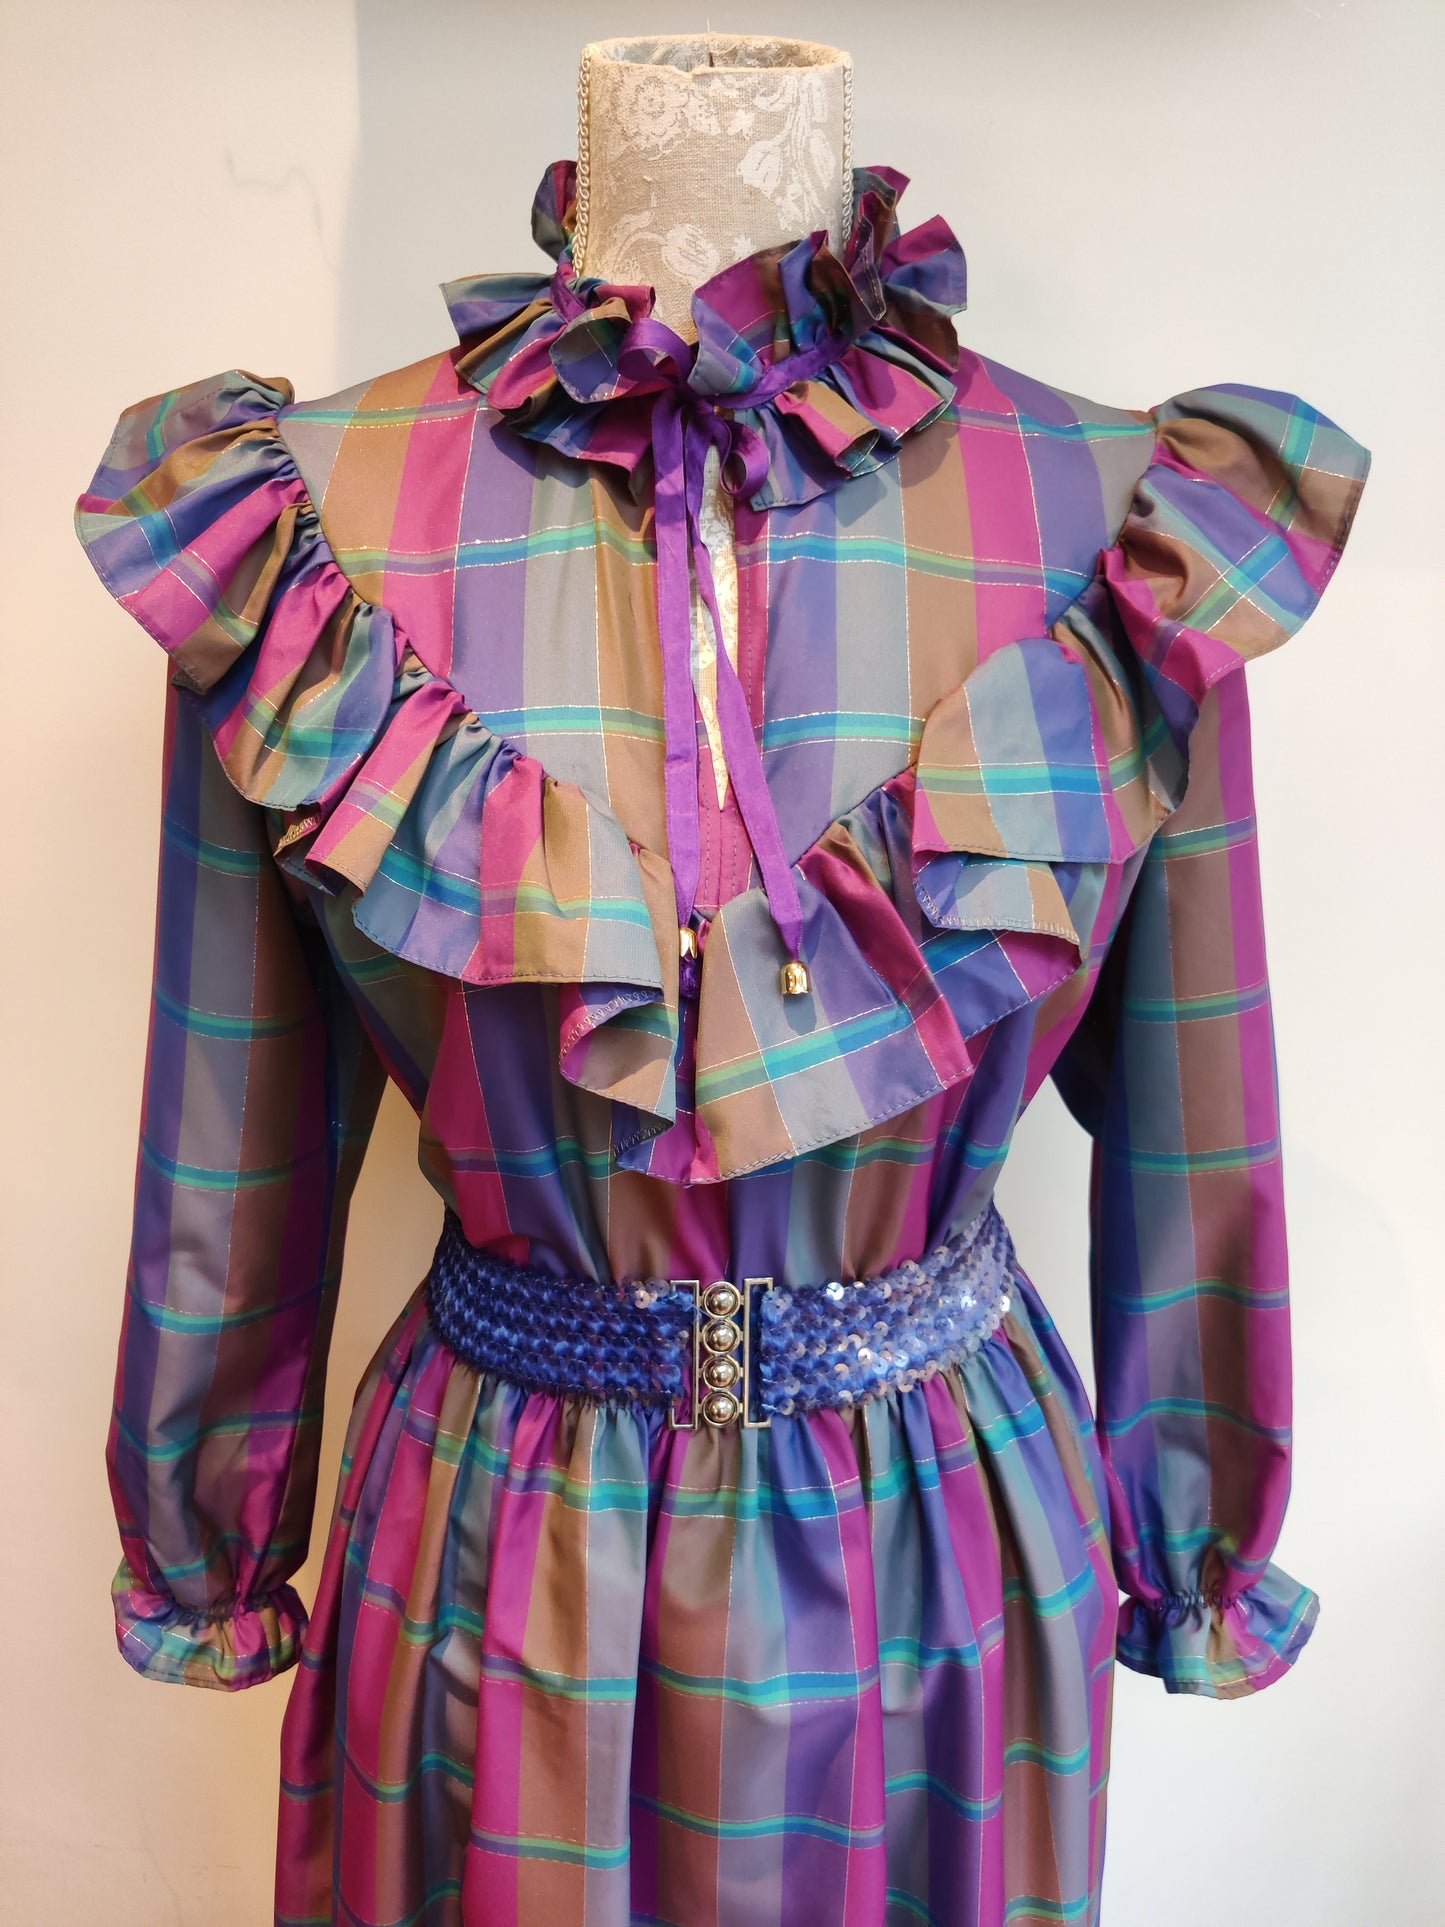 Vintage maxi dress in rainbow ruffle design.